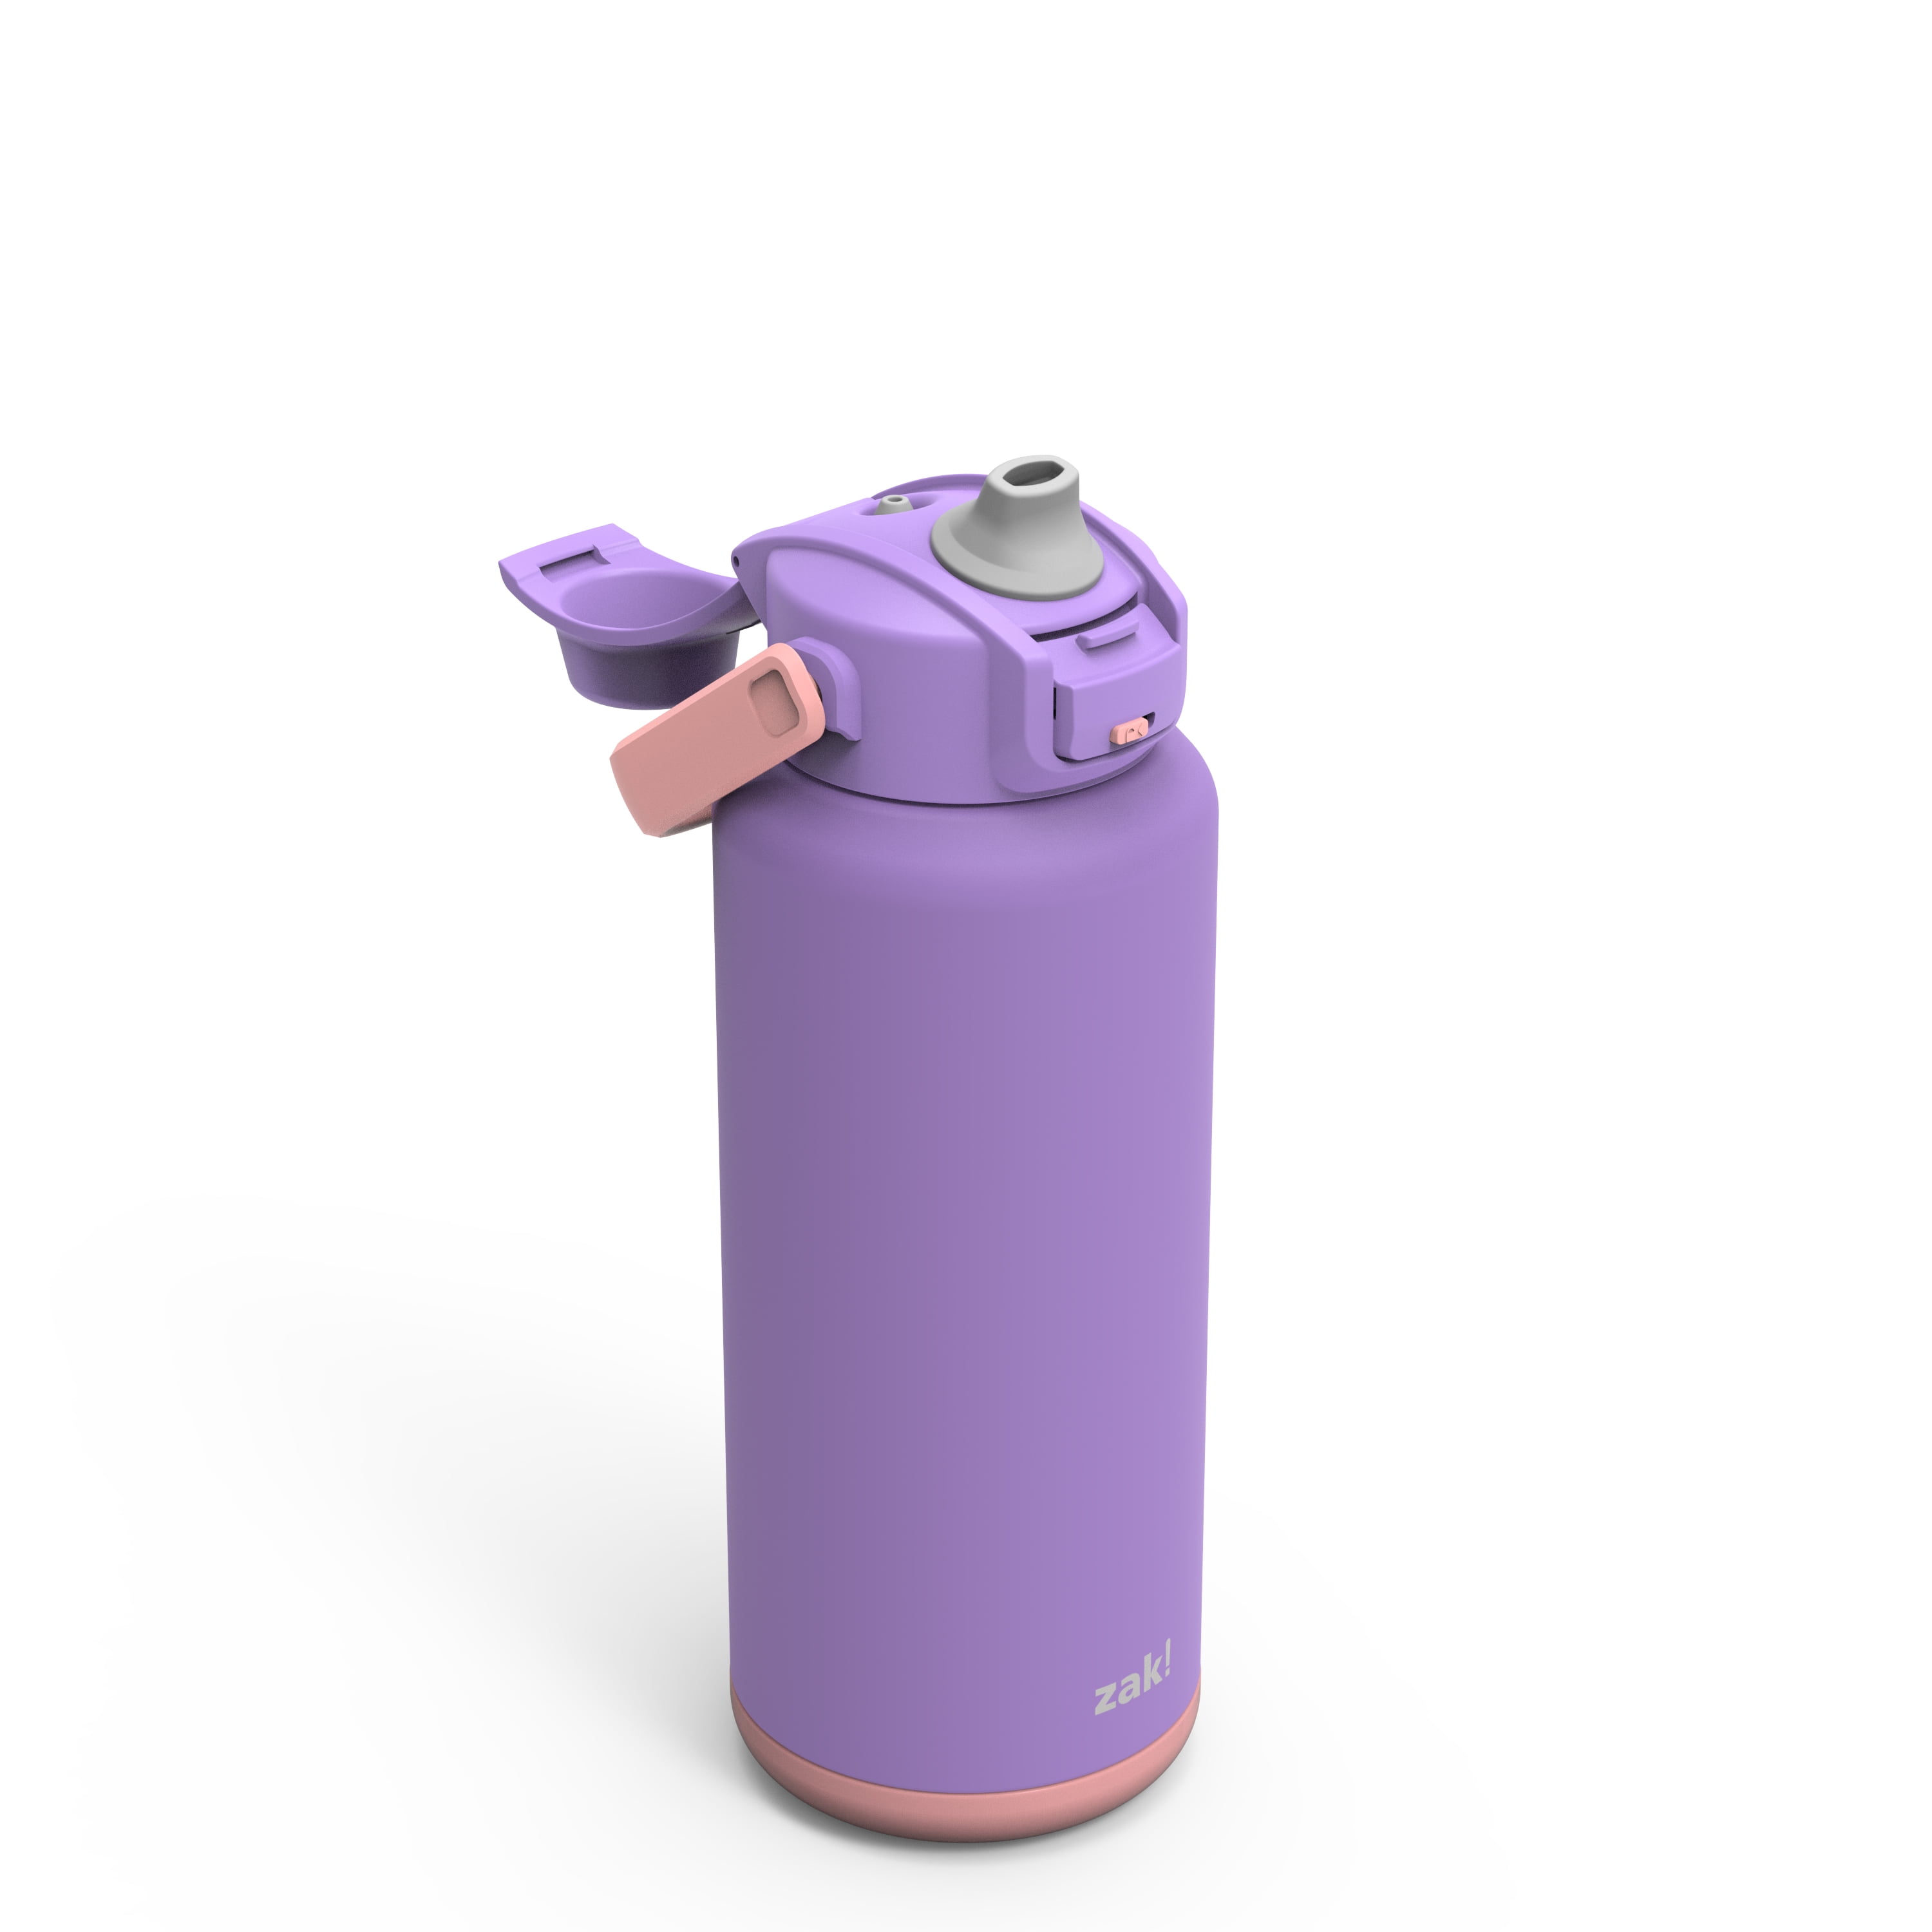 Solid Light Purple Water Bottle by NewburyBoutique